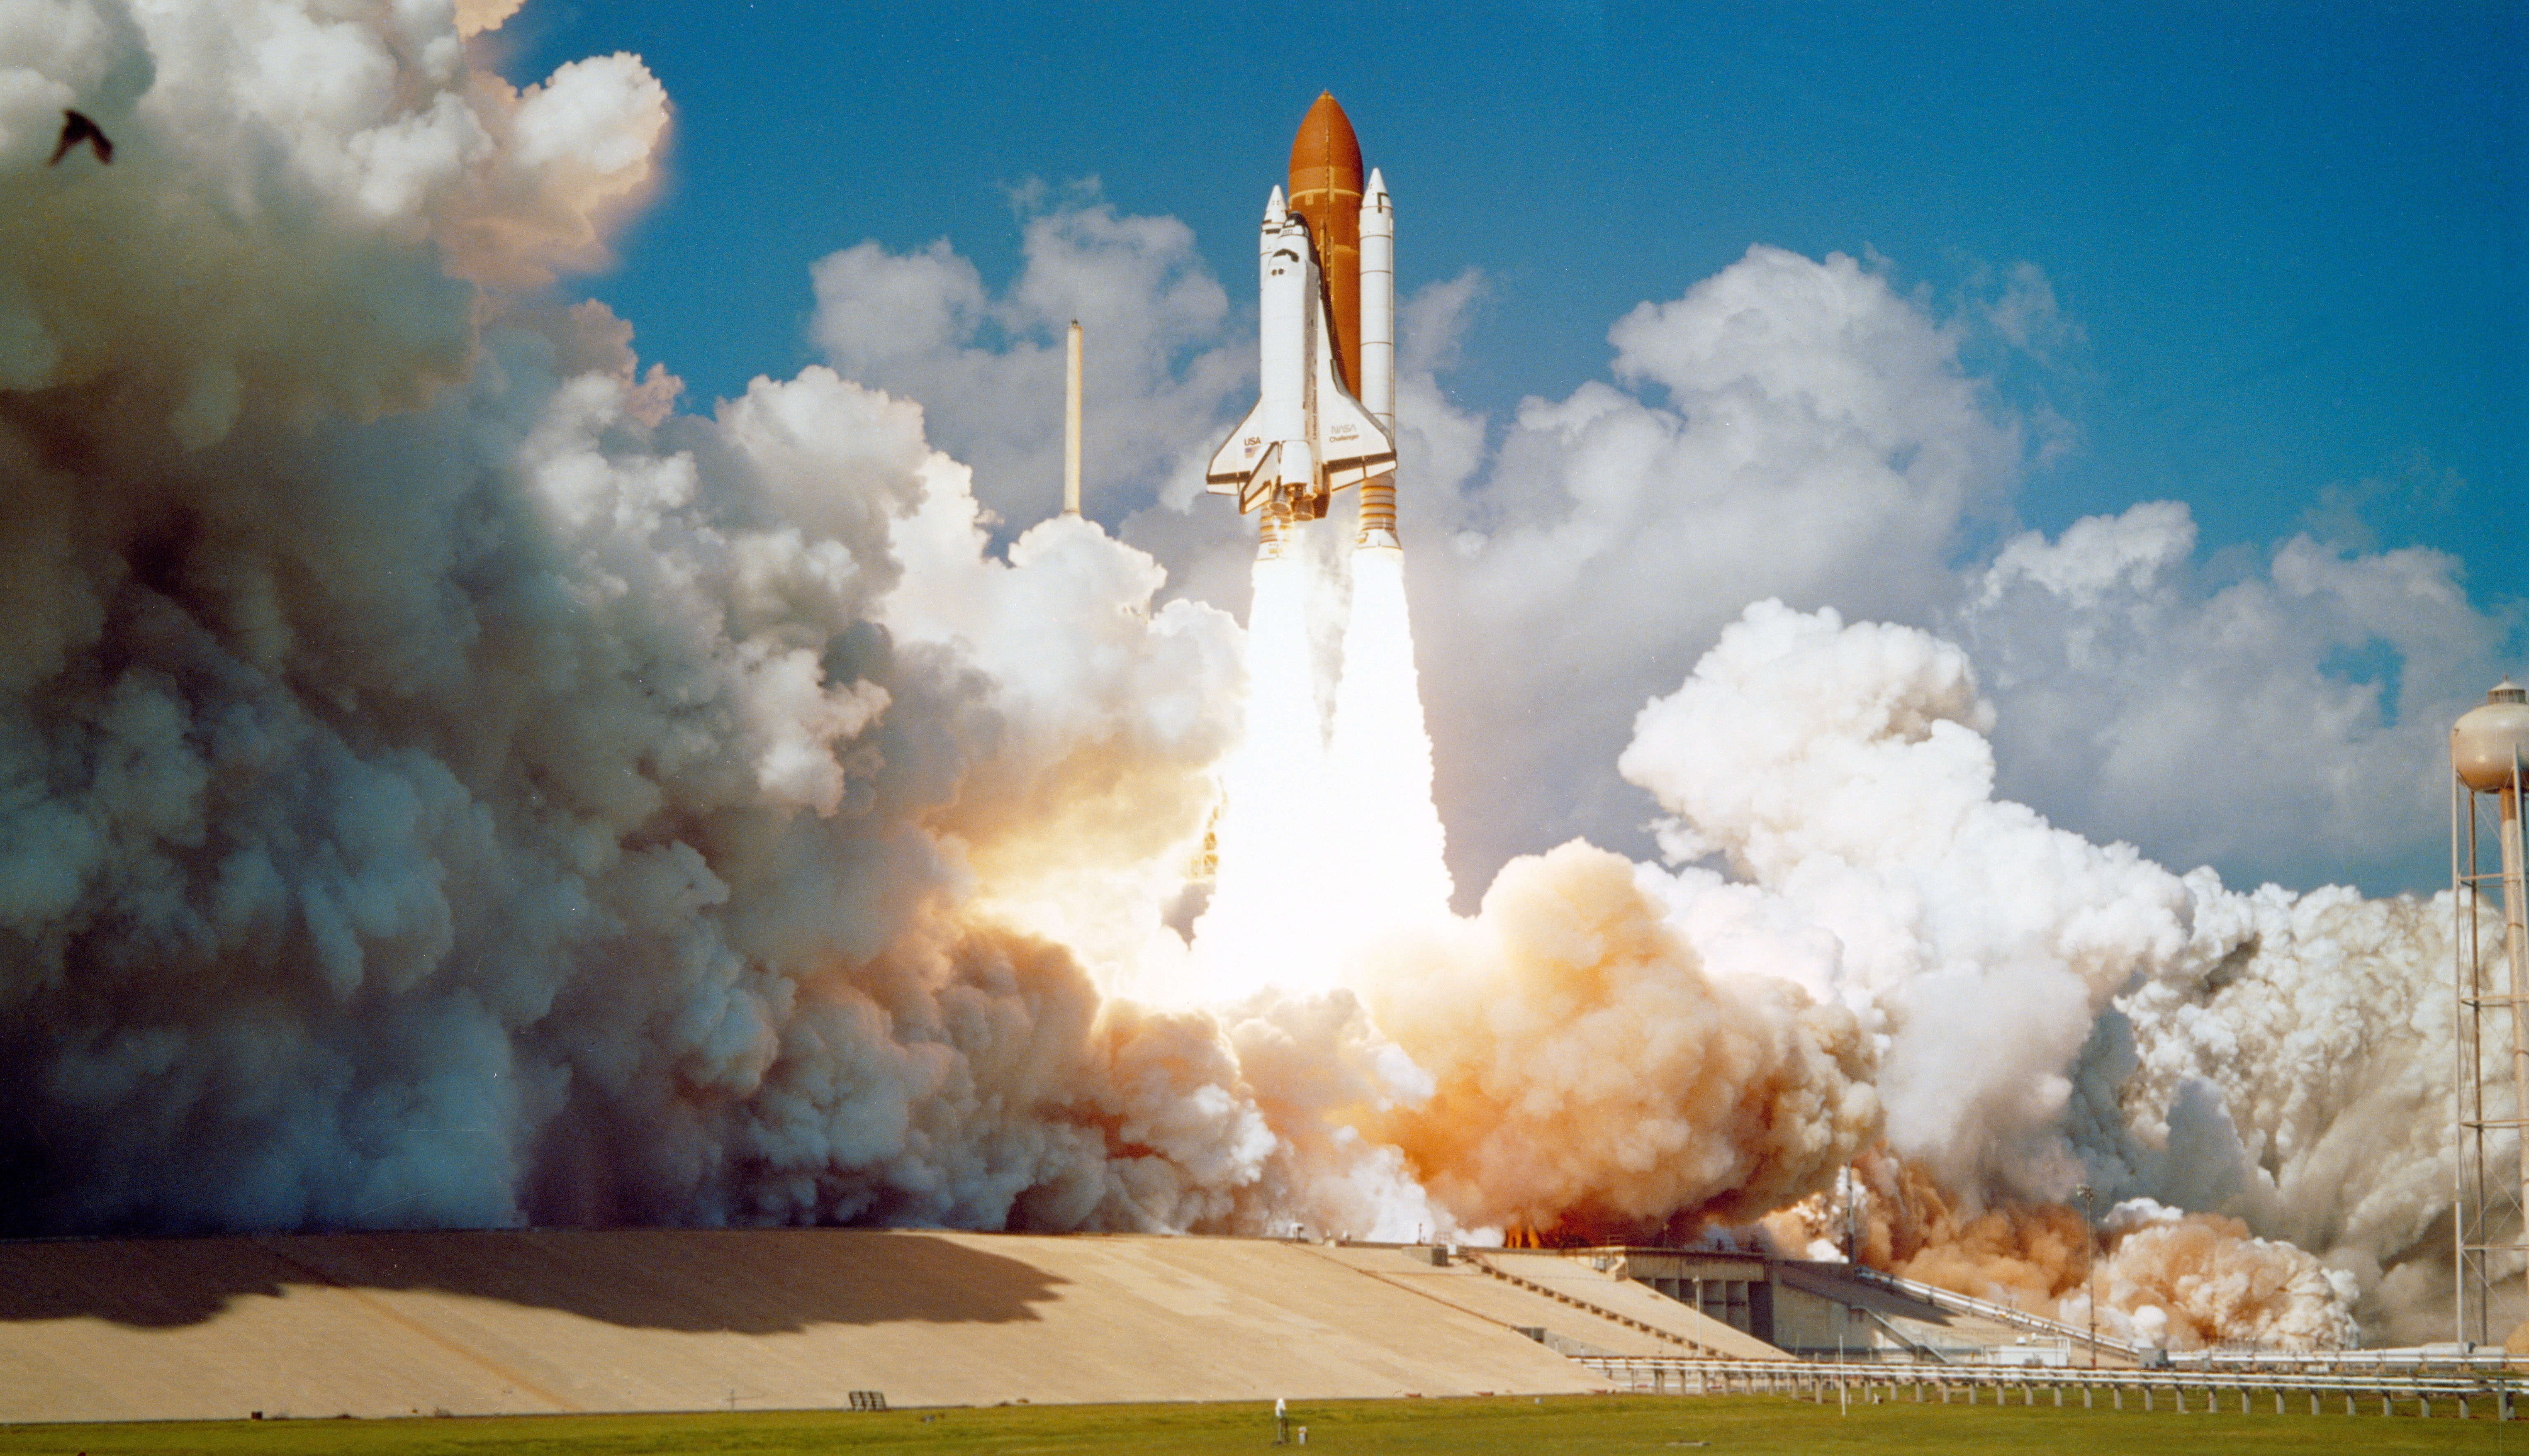 Space shuttle launch in 1983